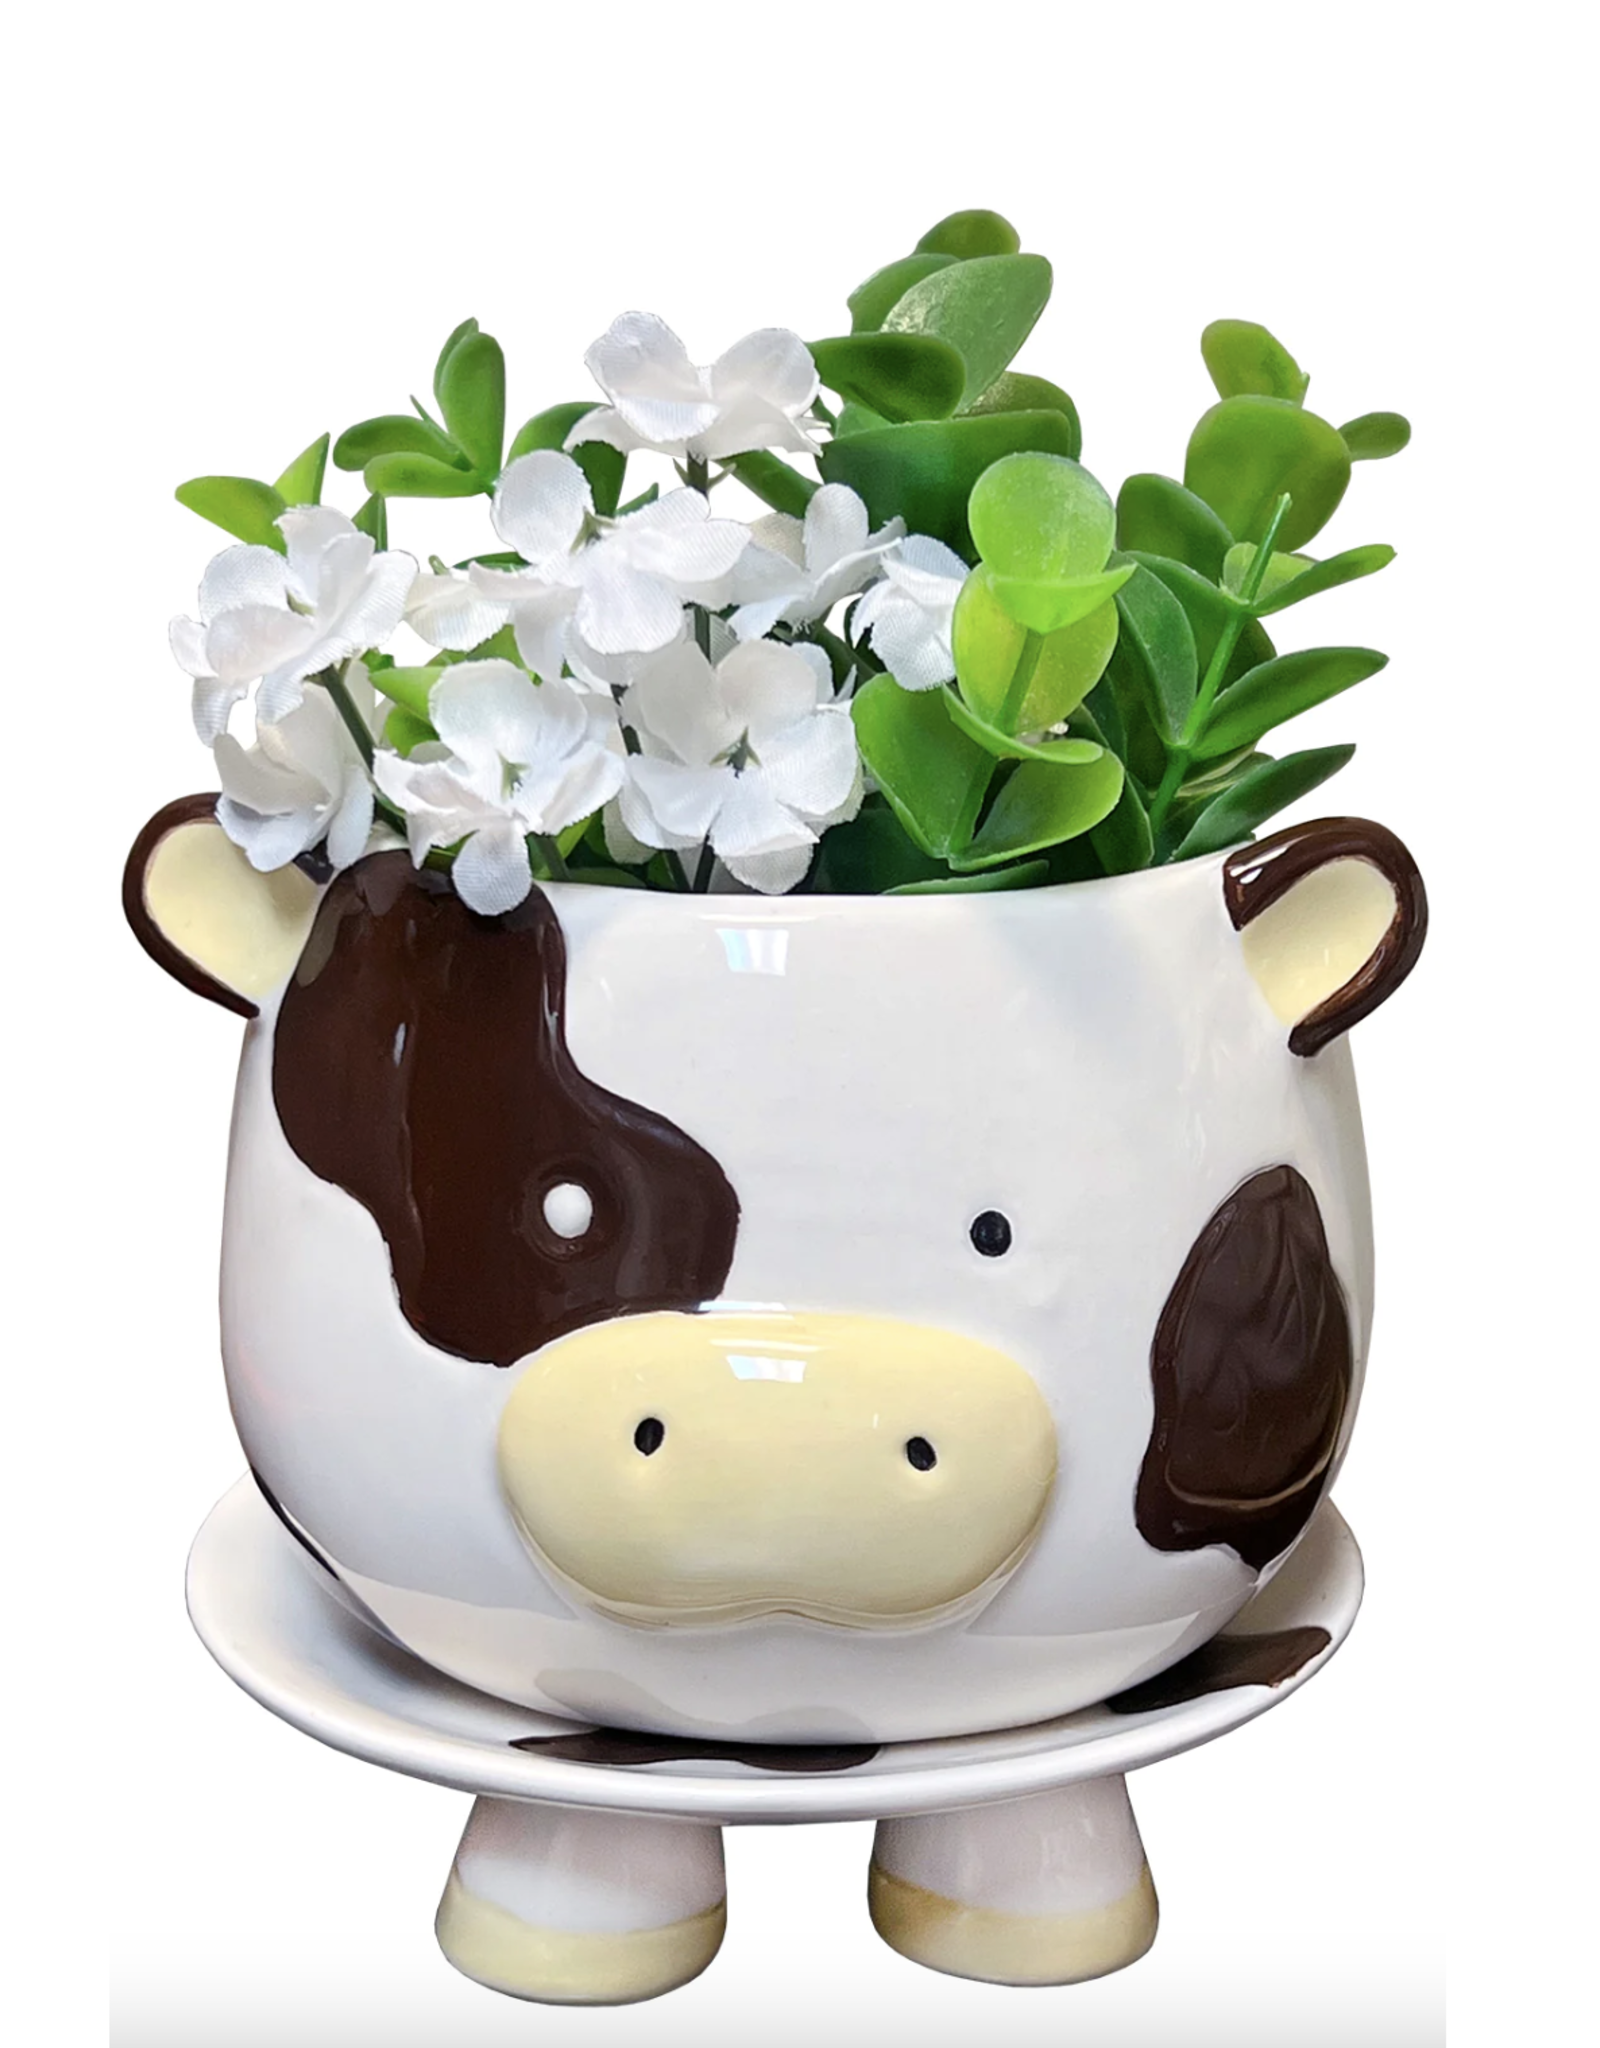 Footsie Planter - Brown Cow